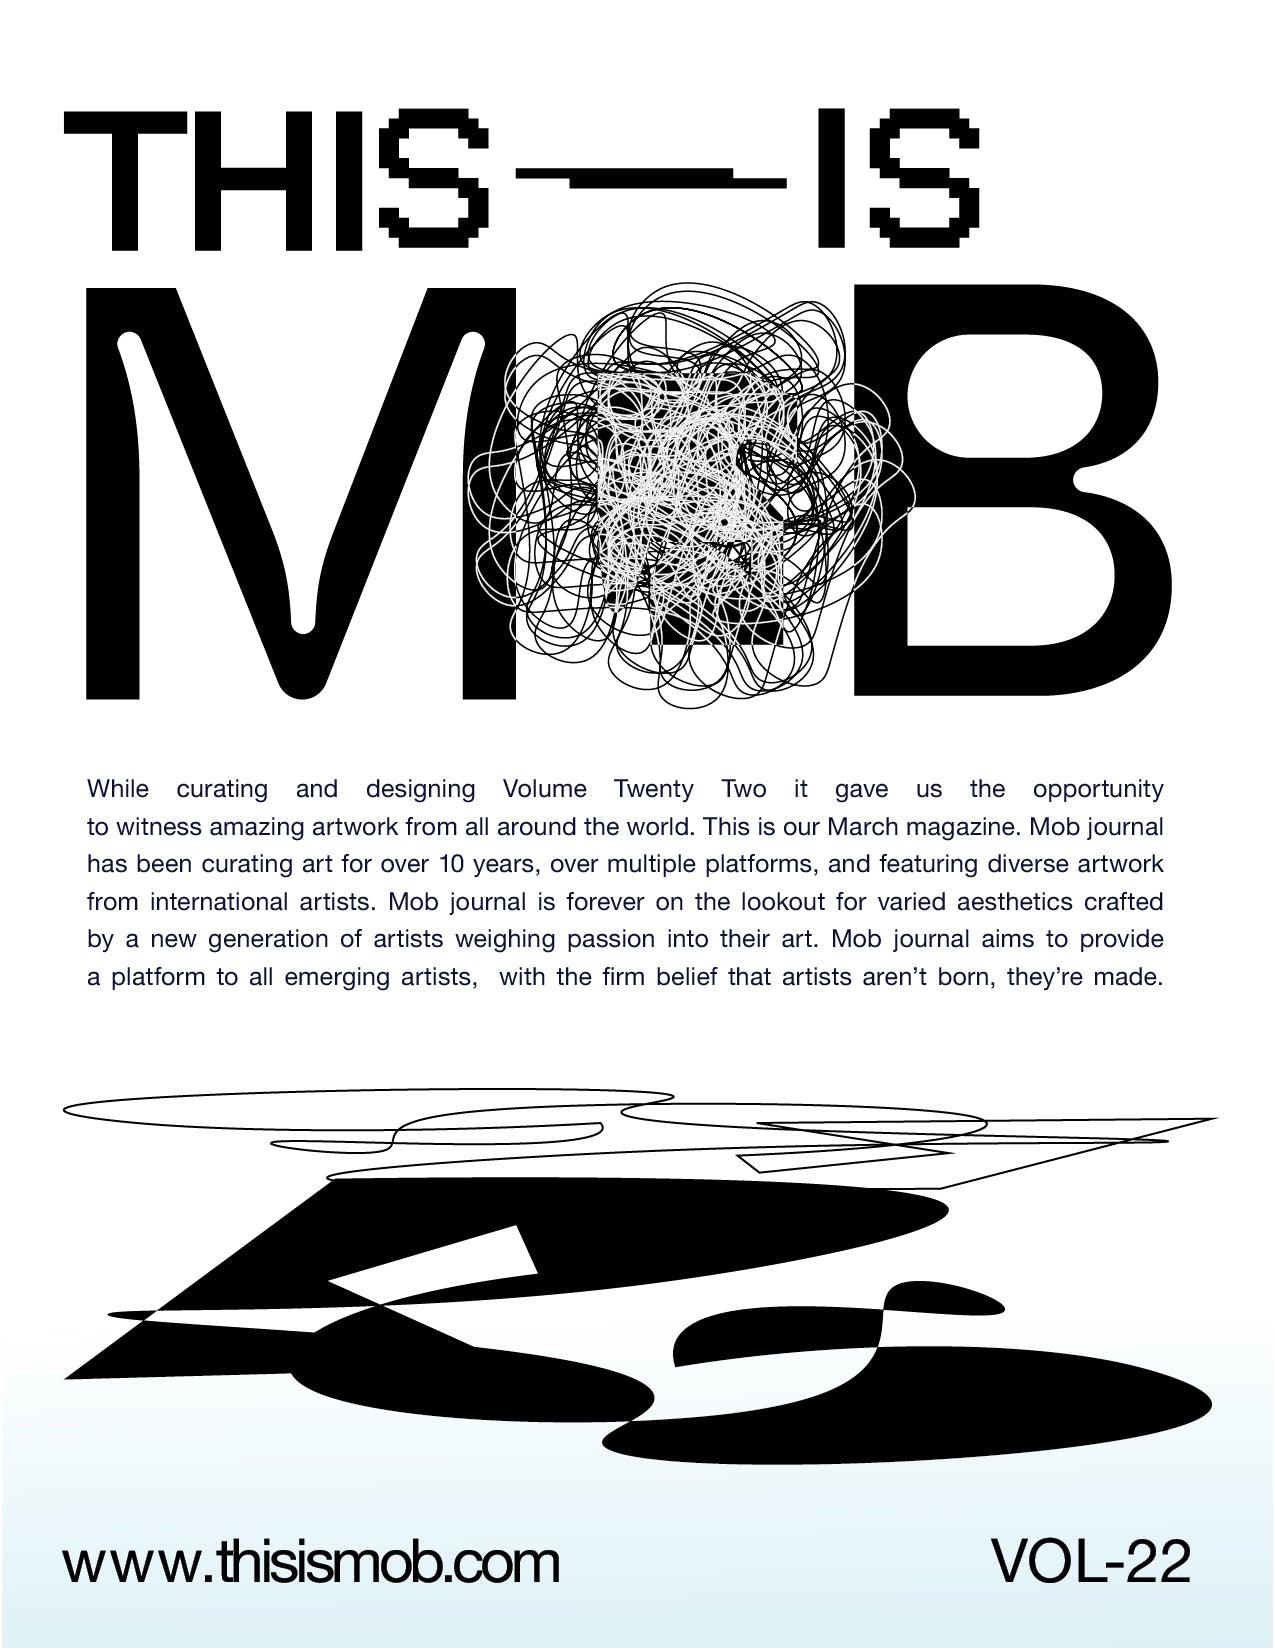 MOB JOURNAL | VOLUME TWENTY TWO | ISSUE #49 - Mob Journal